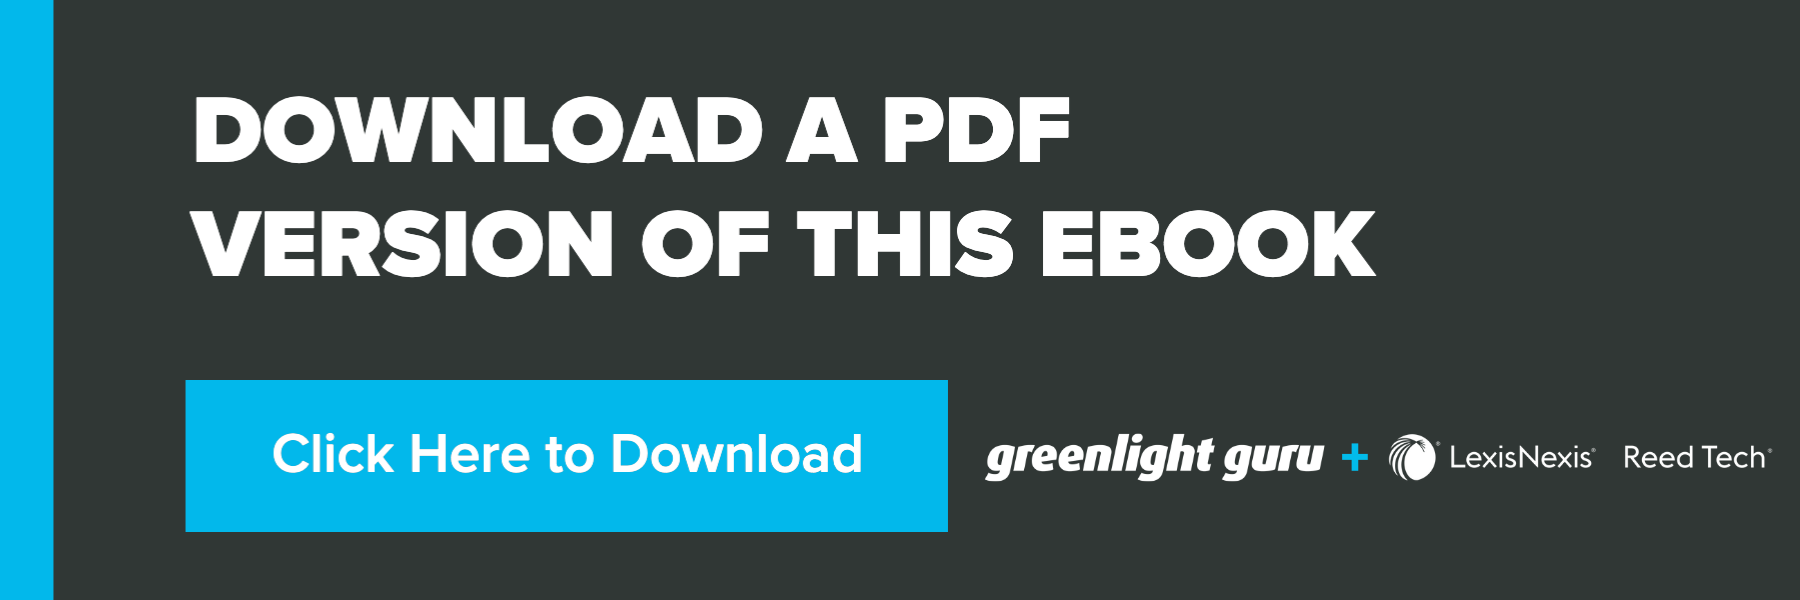 ebook download_greenlight guru-reed tech-1